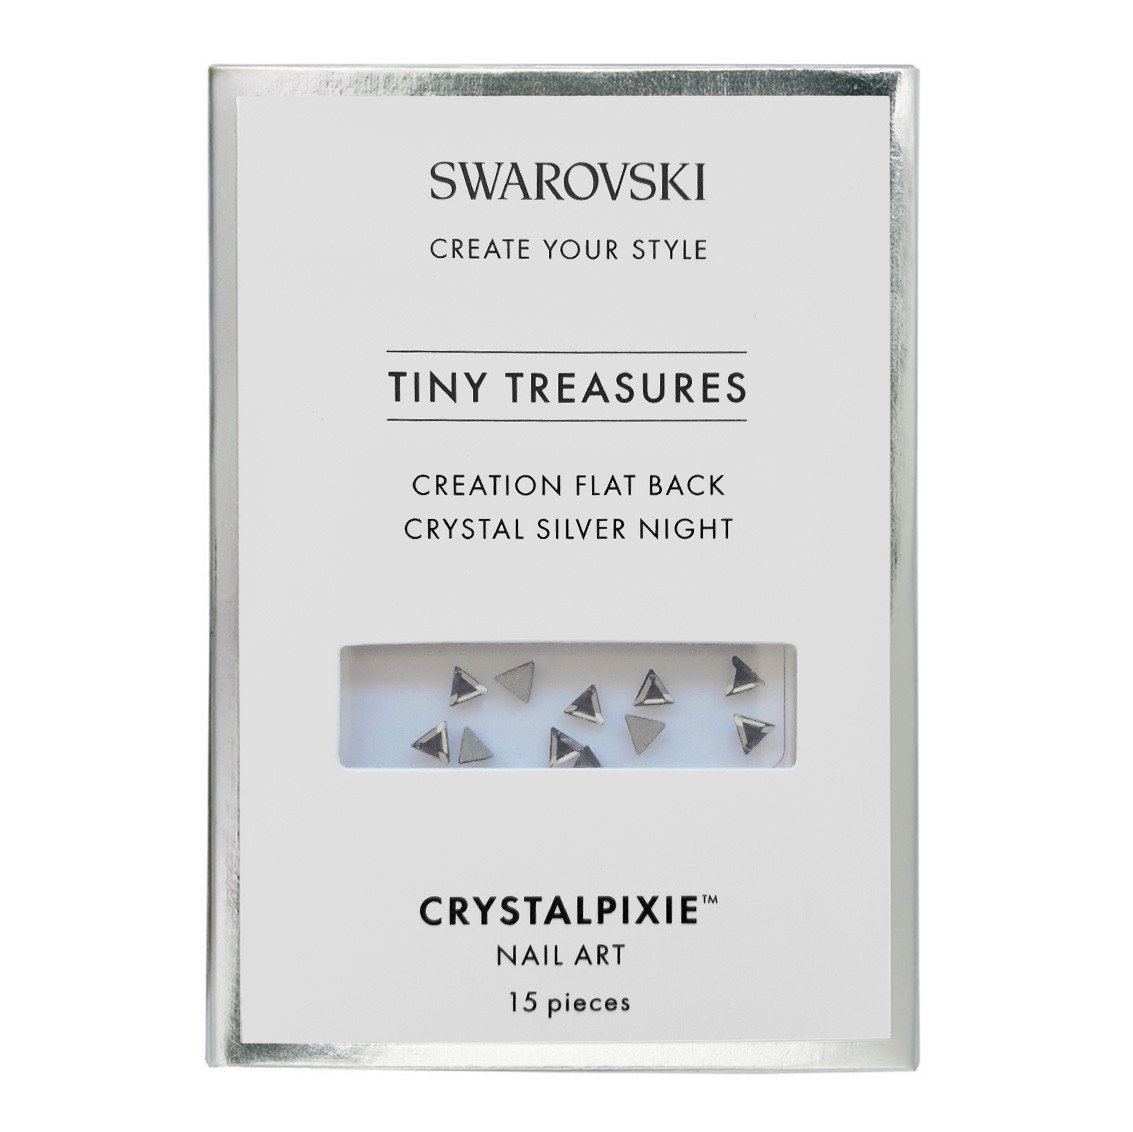 Creation Flat Back - Kristall Silver Night 20 Stück - Swarovski® Tiny Treasures